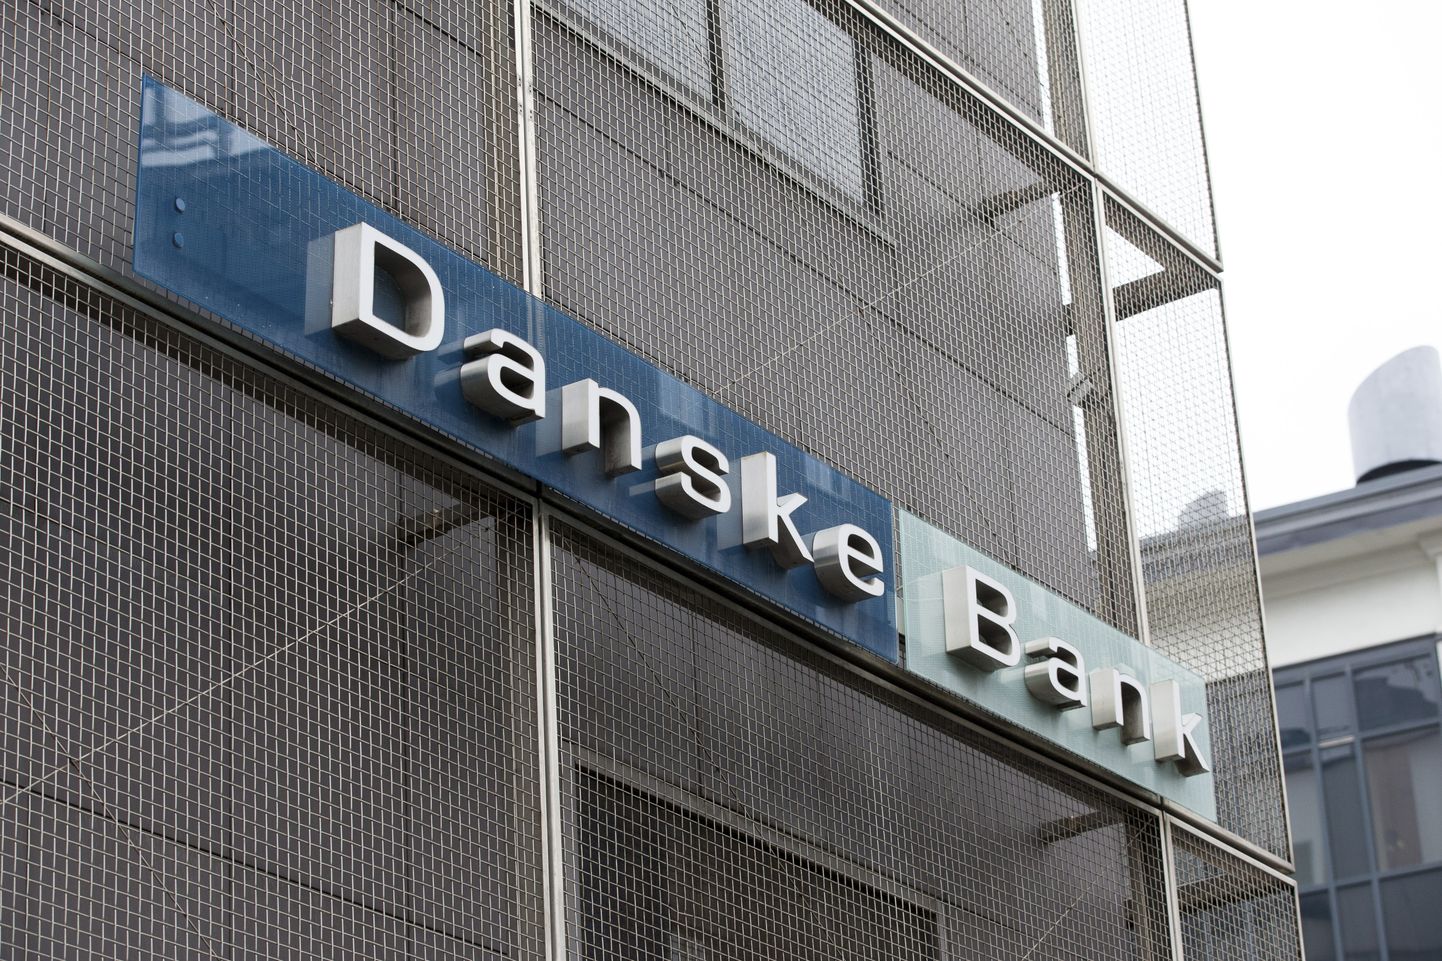 Логотип Danske Bank. Иллюстративное фото.